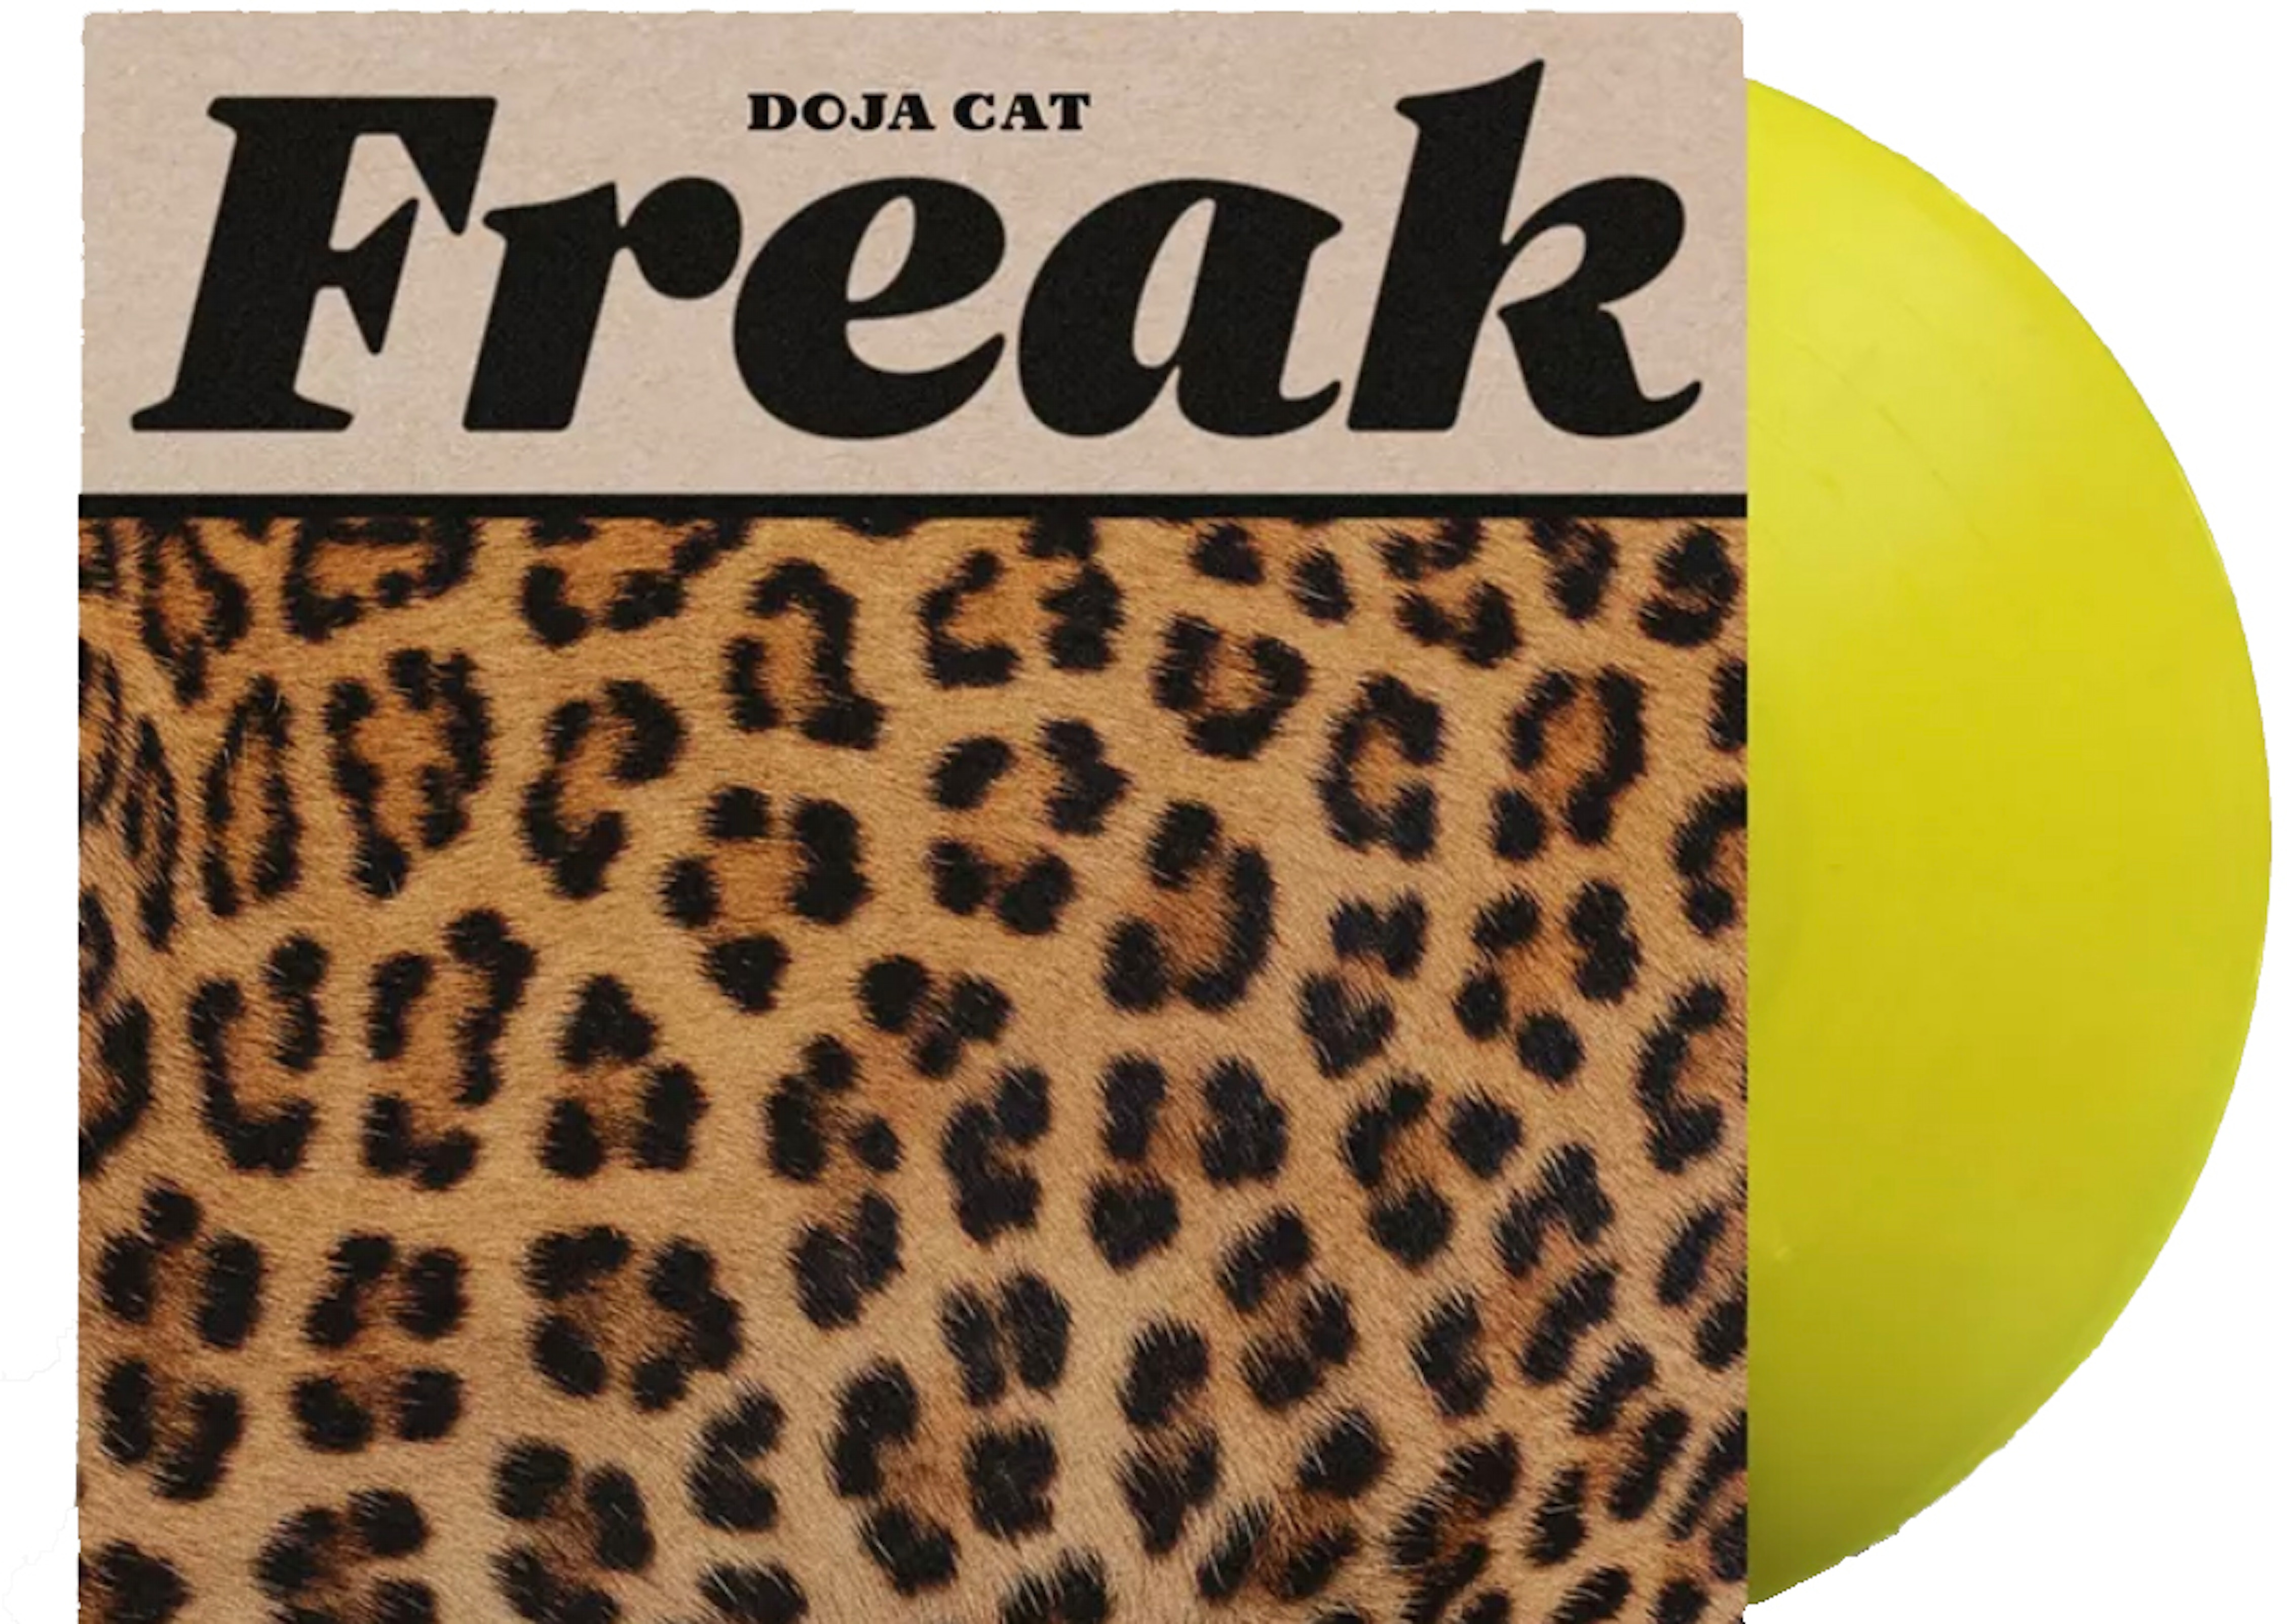 Doja Cat Freak Limited Translucent Yellow LP Vinyl Yellow